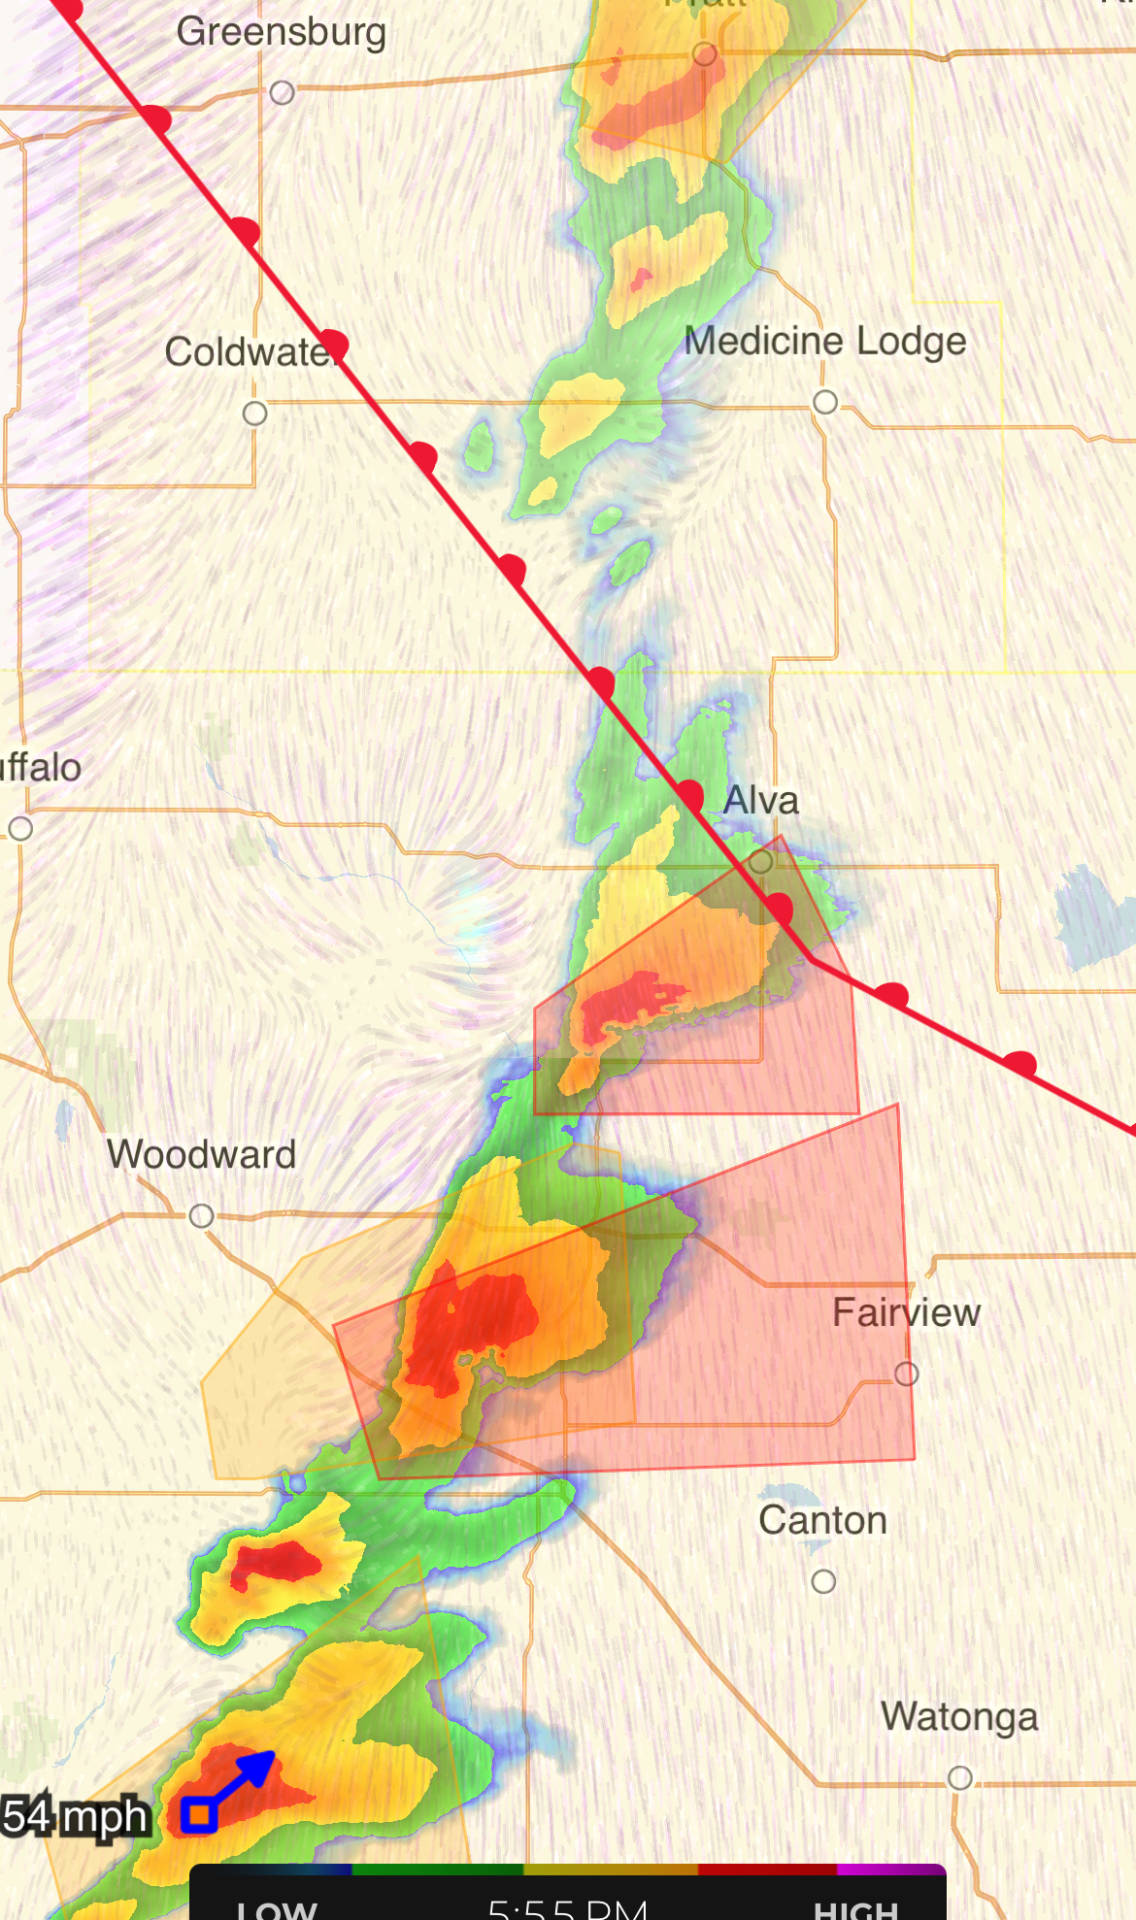 Oklahoma Tornadoes
#MonitoringFromHome